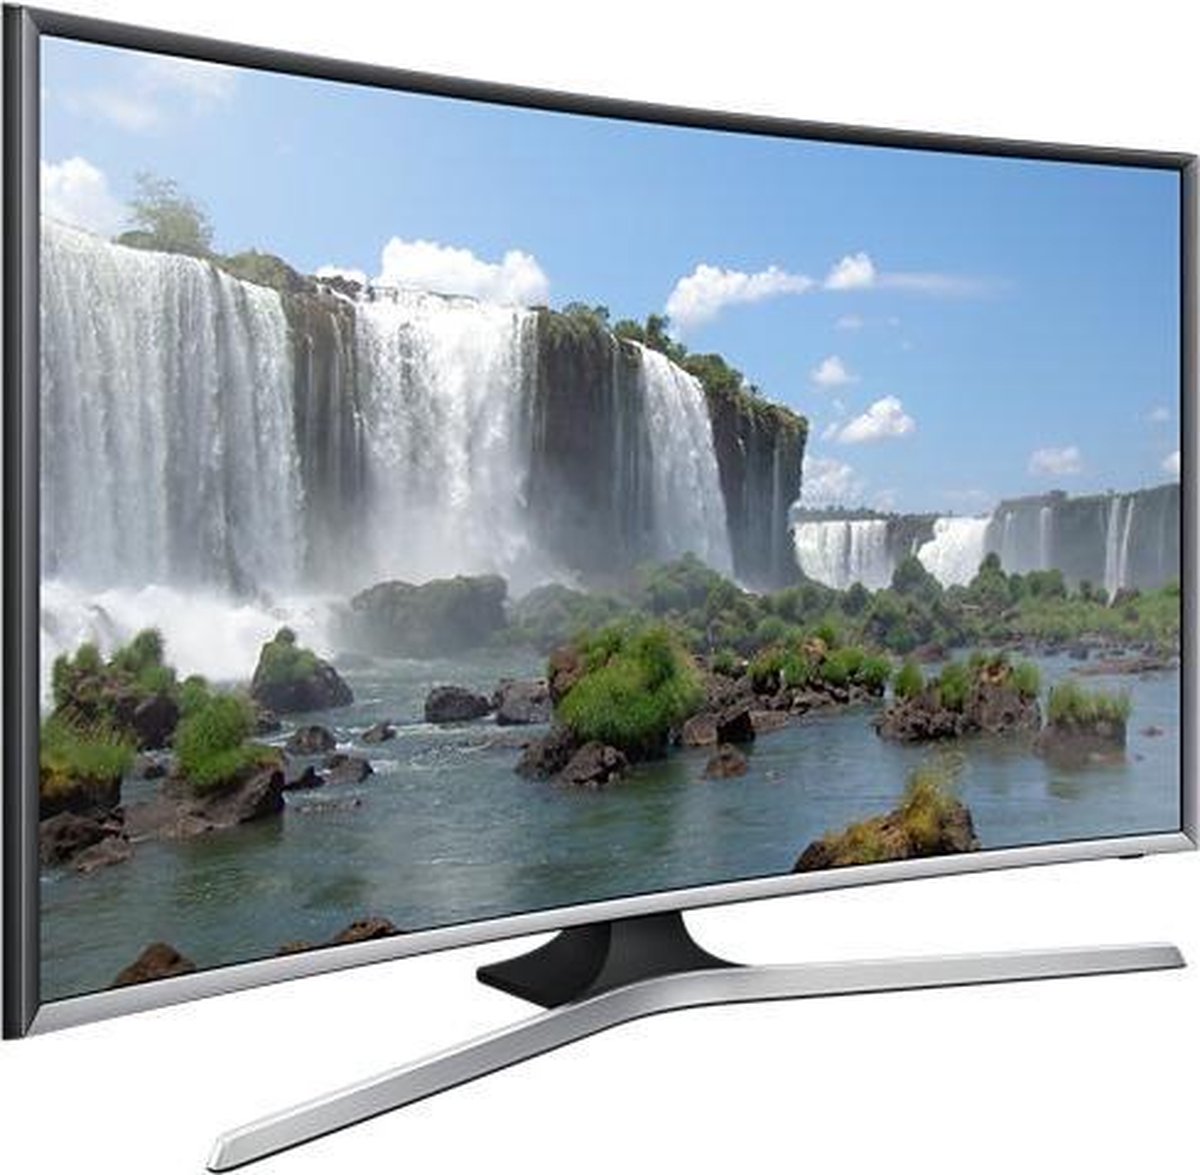 hypotheek Voorwaarde Port Samsung UE48J6370 - CURVED Led-tv - 48 inch - Full HD - Smart tv | bol.com